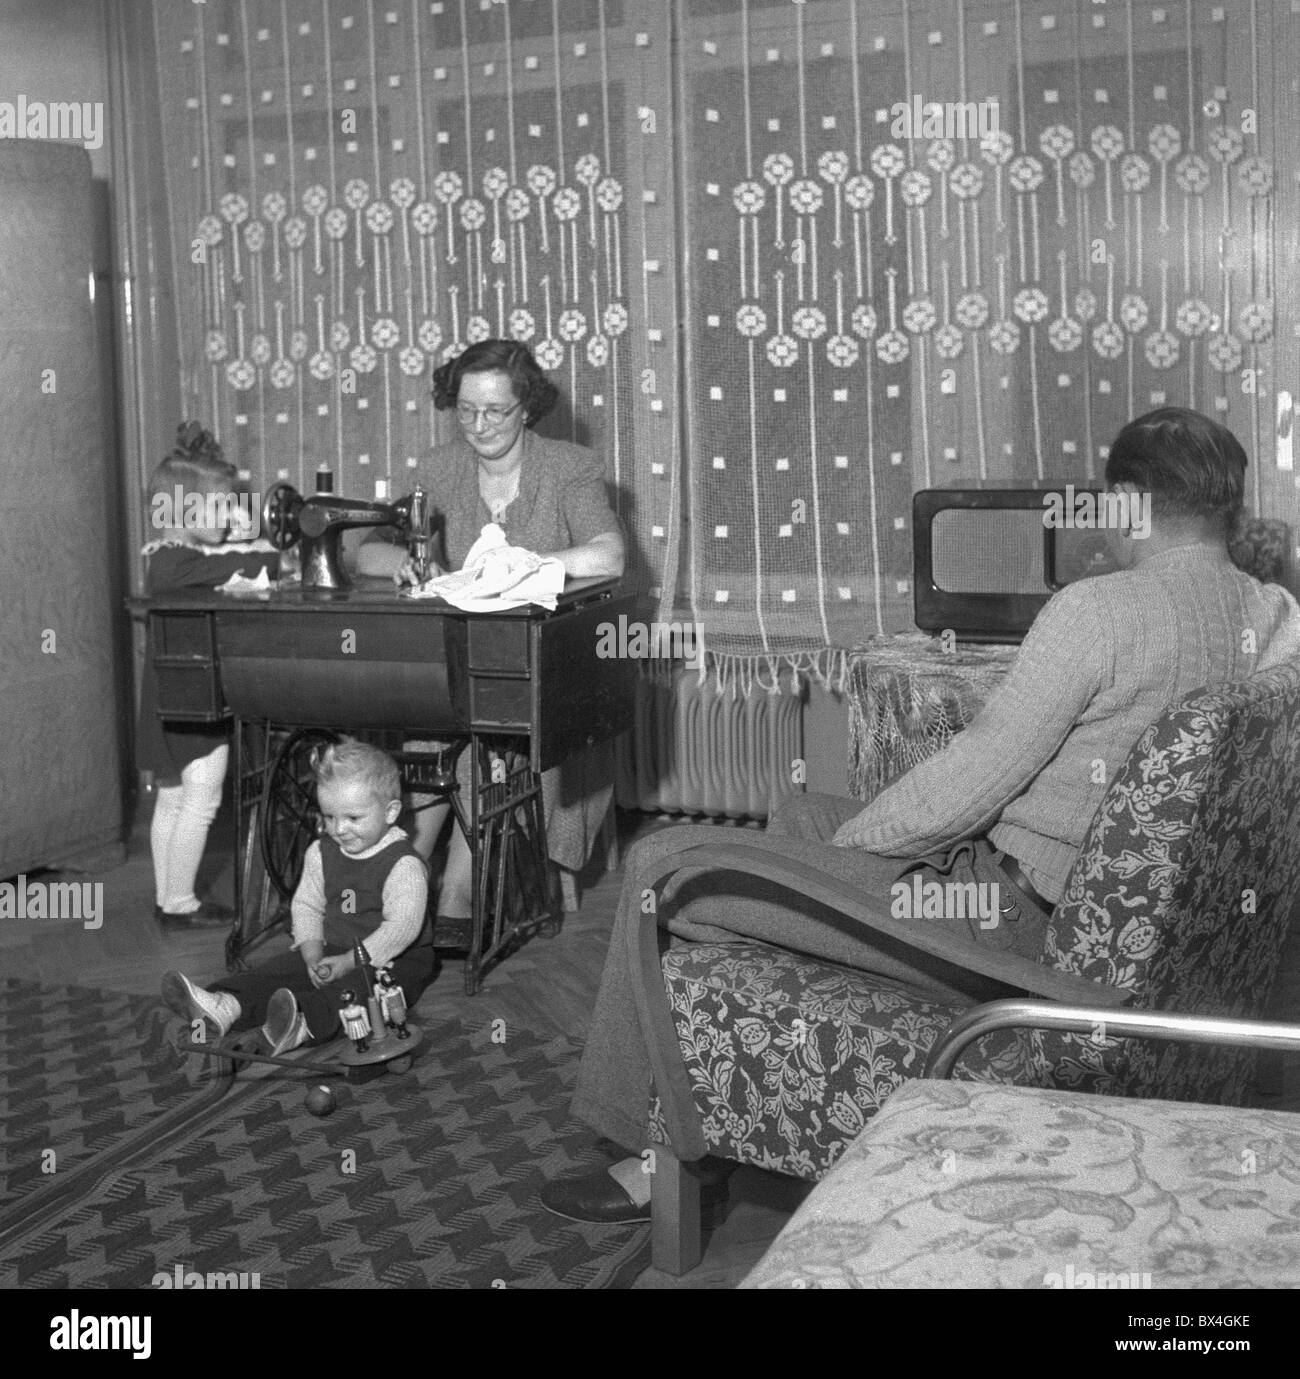 1950, Socialist living, sewing machine, Communist propaganda Stock Photo